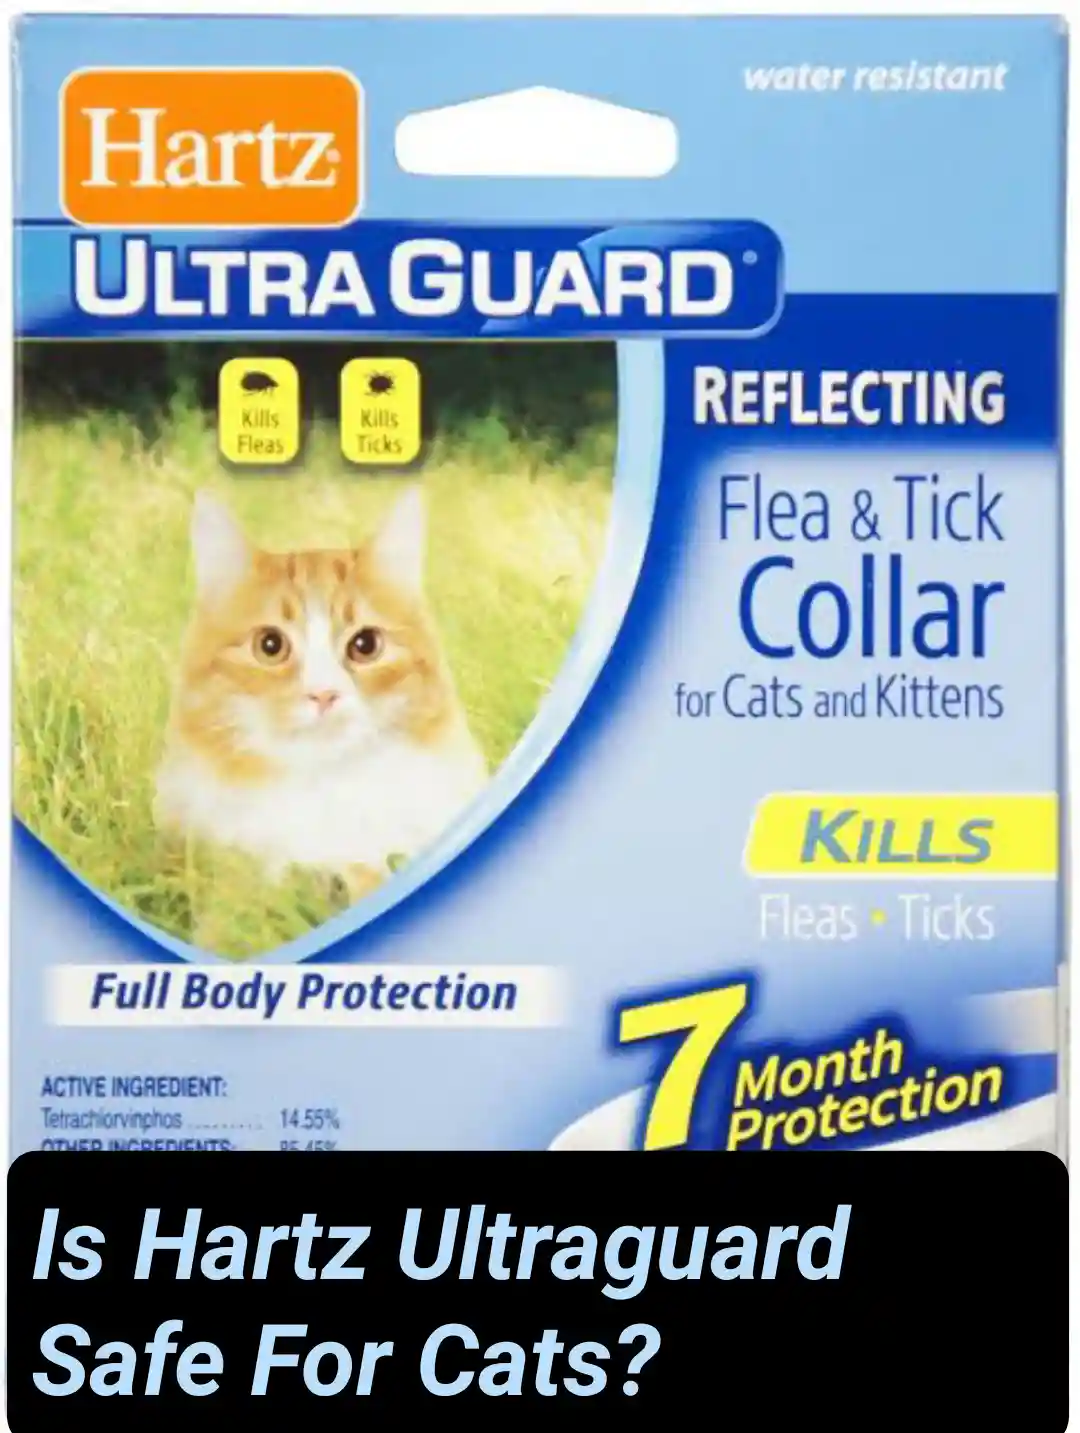 Is Hartz Ultraguard Safe For Cats?